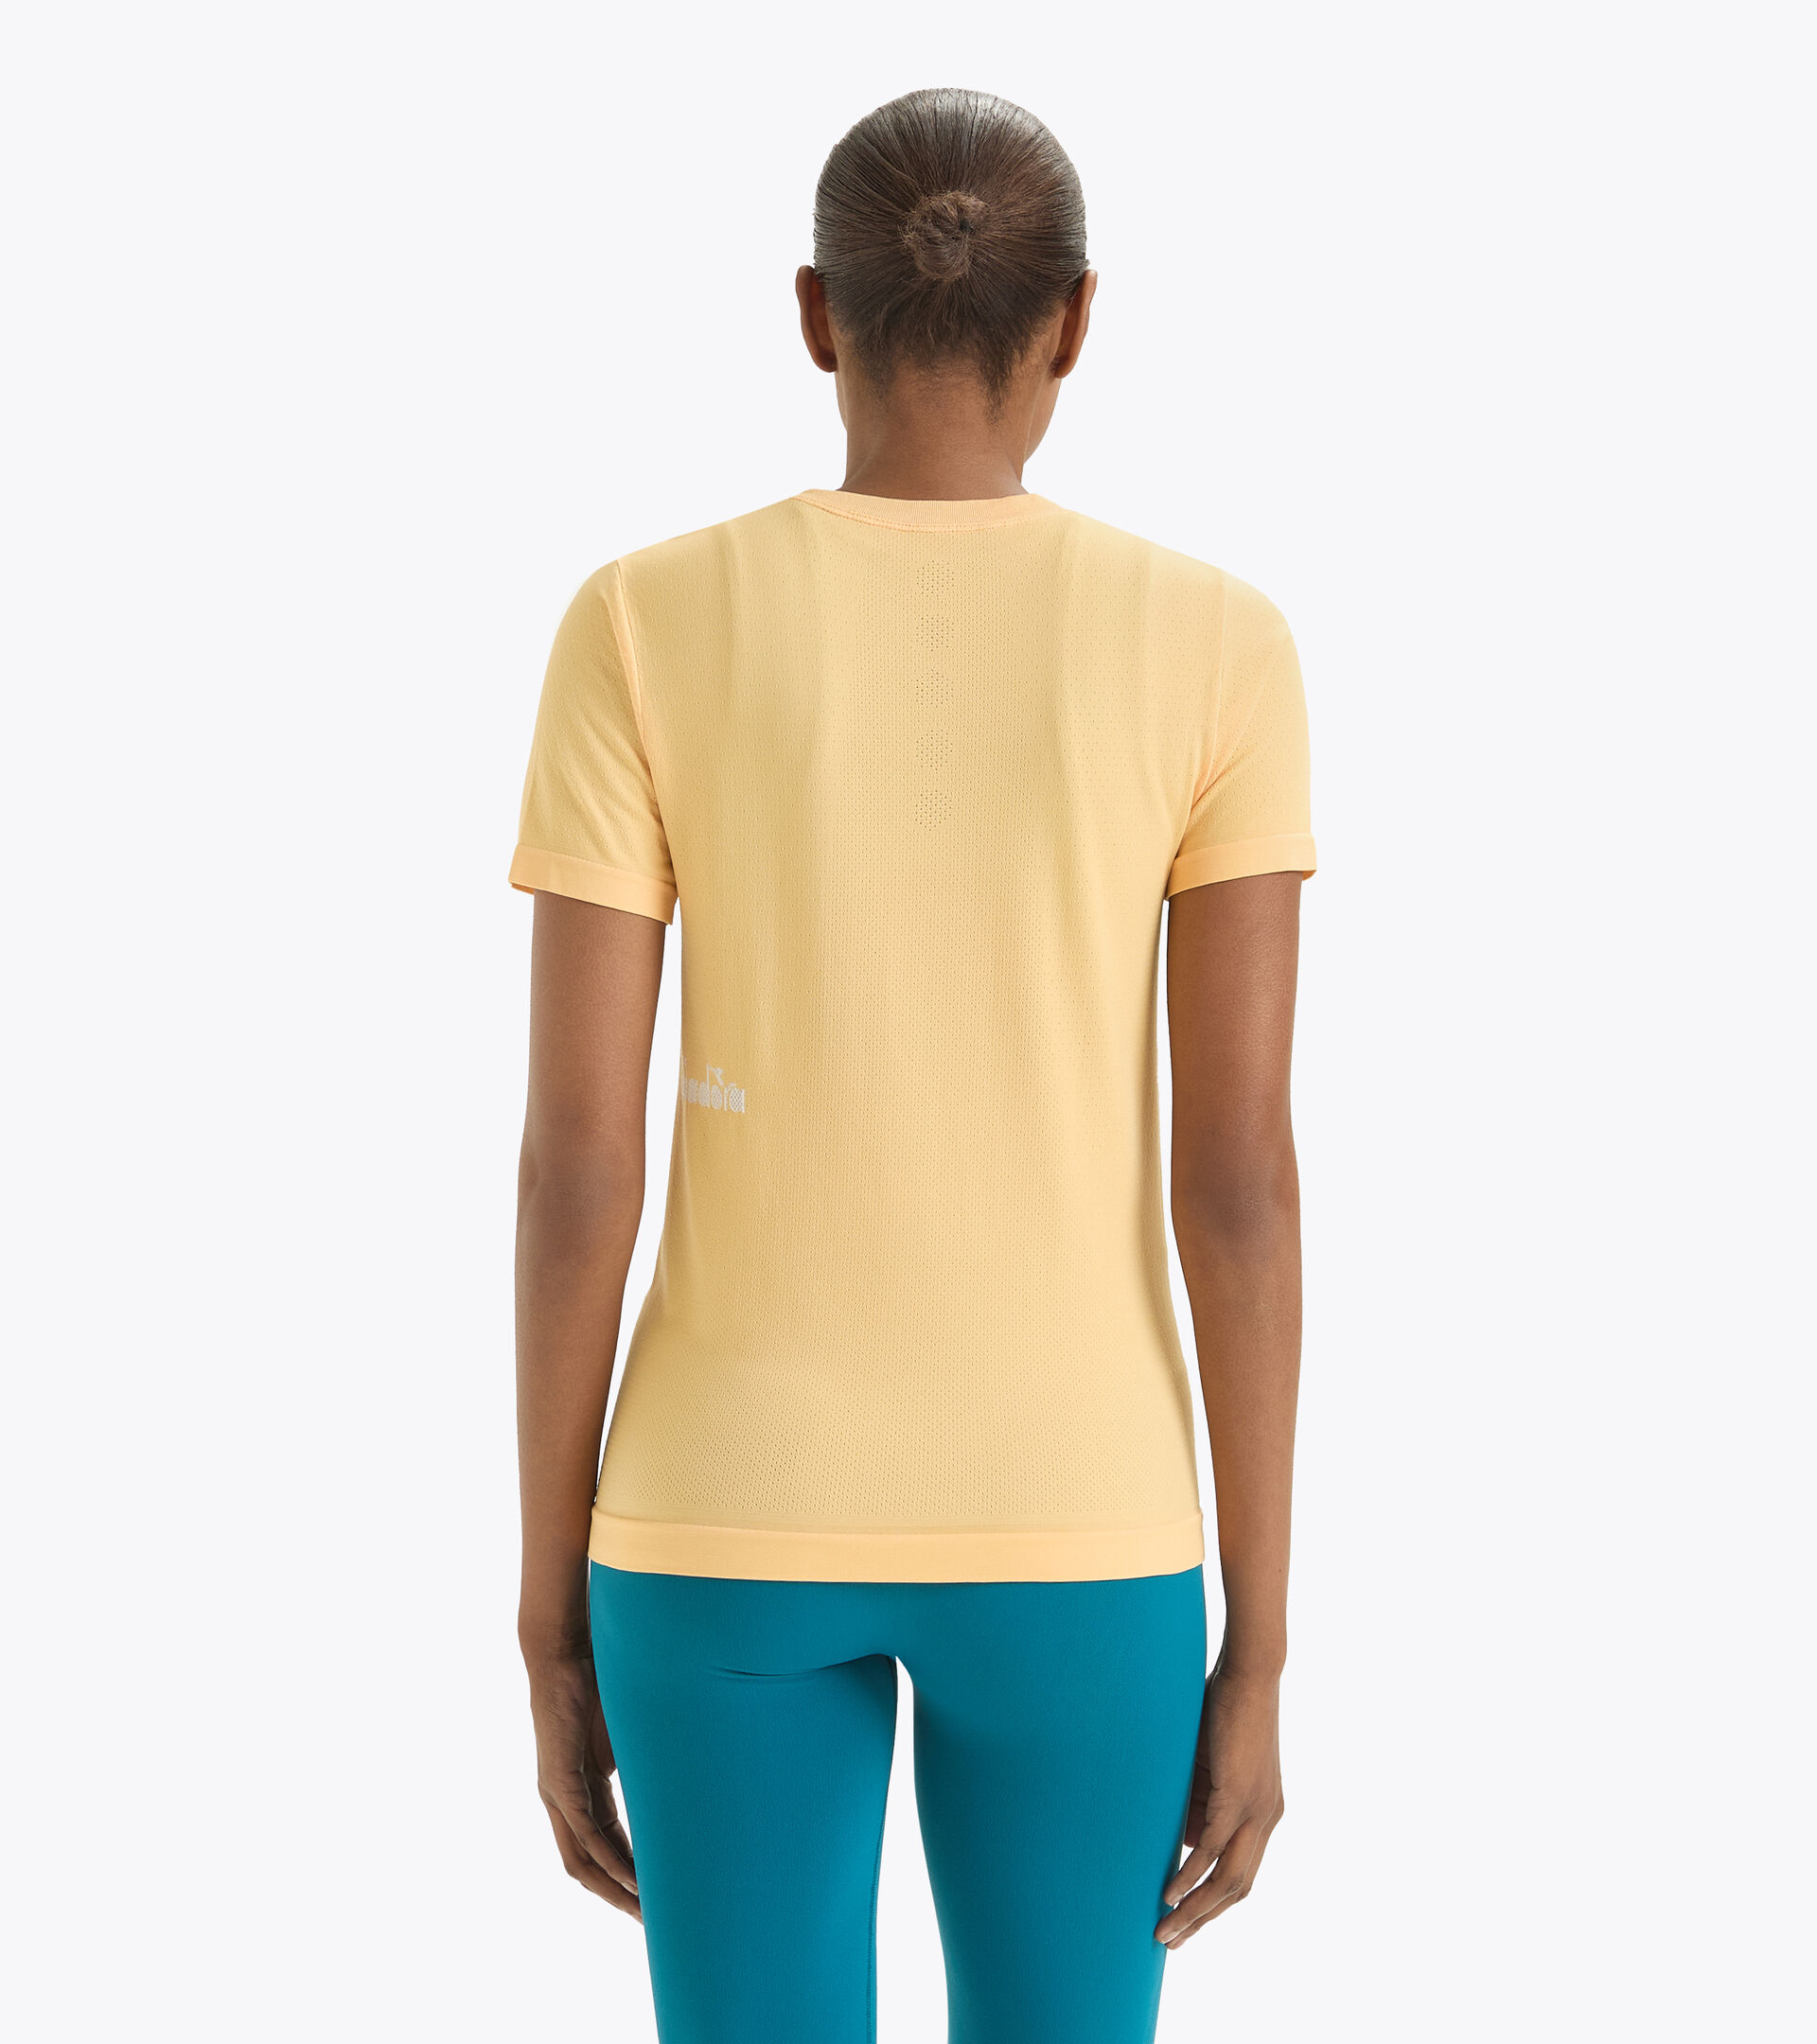 T-shirt de running sans coutures - Made in Italy - Femme L. SS T-SHIRT SKIN FRIENDLY JAUNE SOUCI CLAIR - Diadora